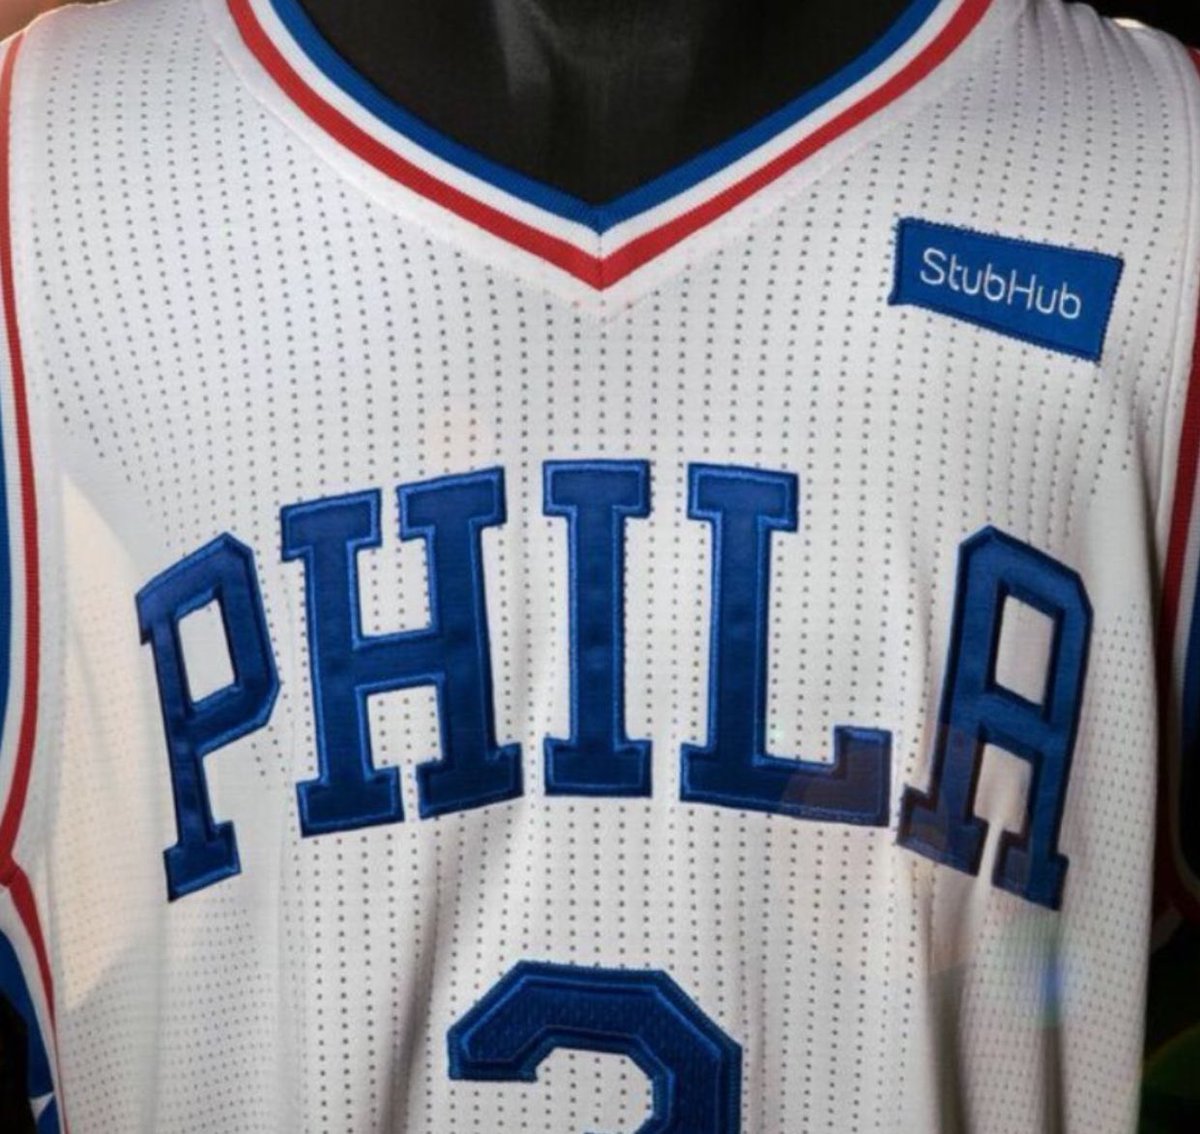 Philadelphia 76ers jersey patch sponsor StubHub.